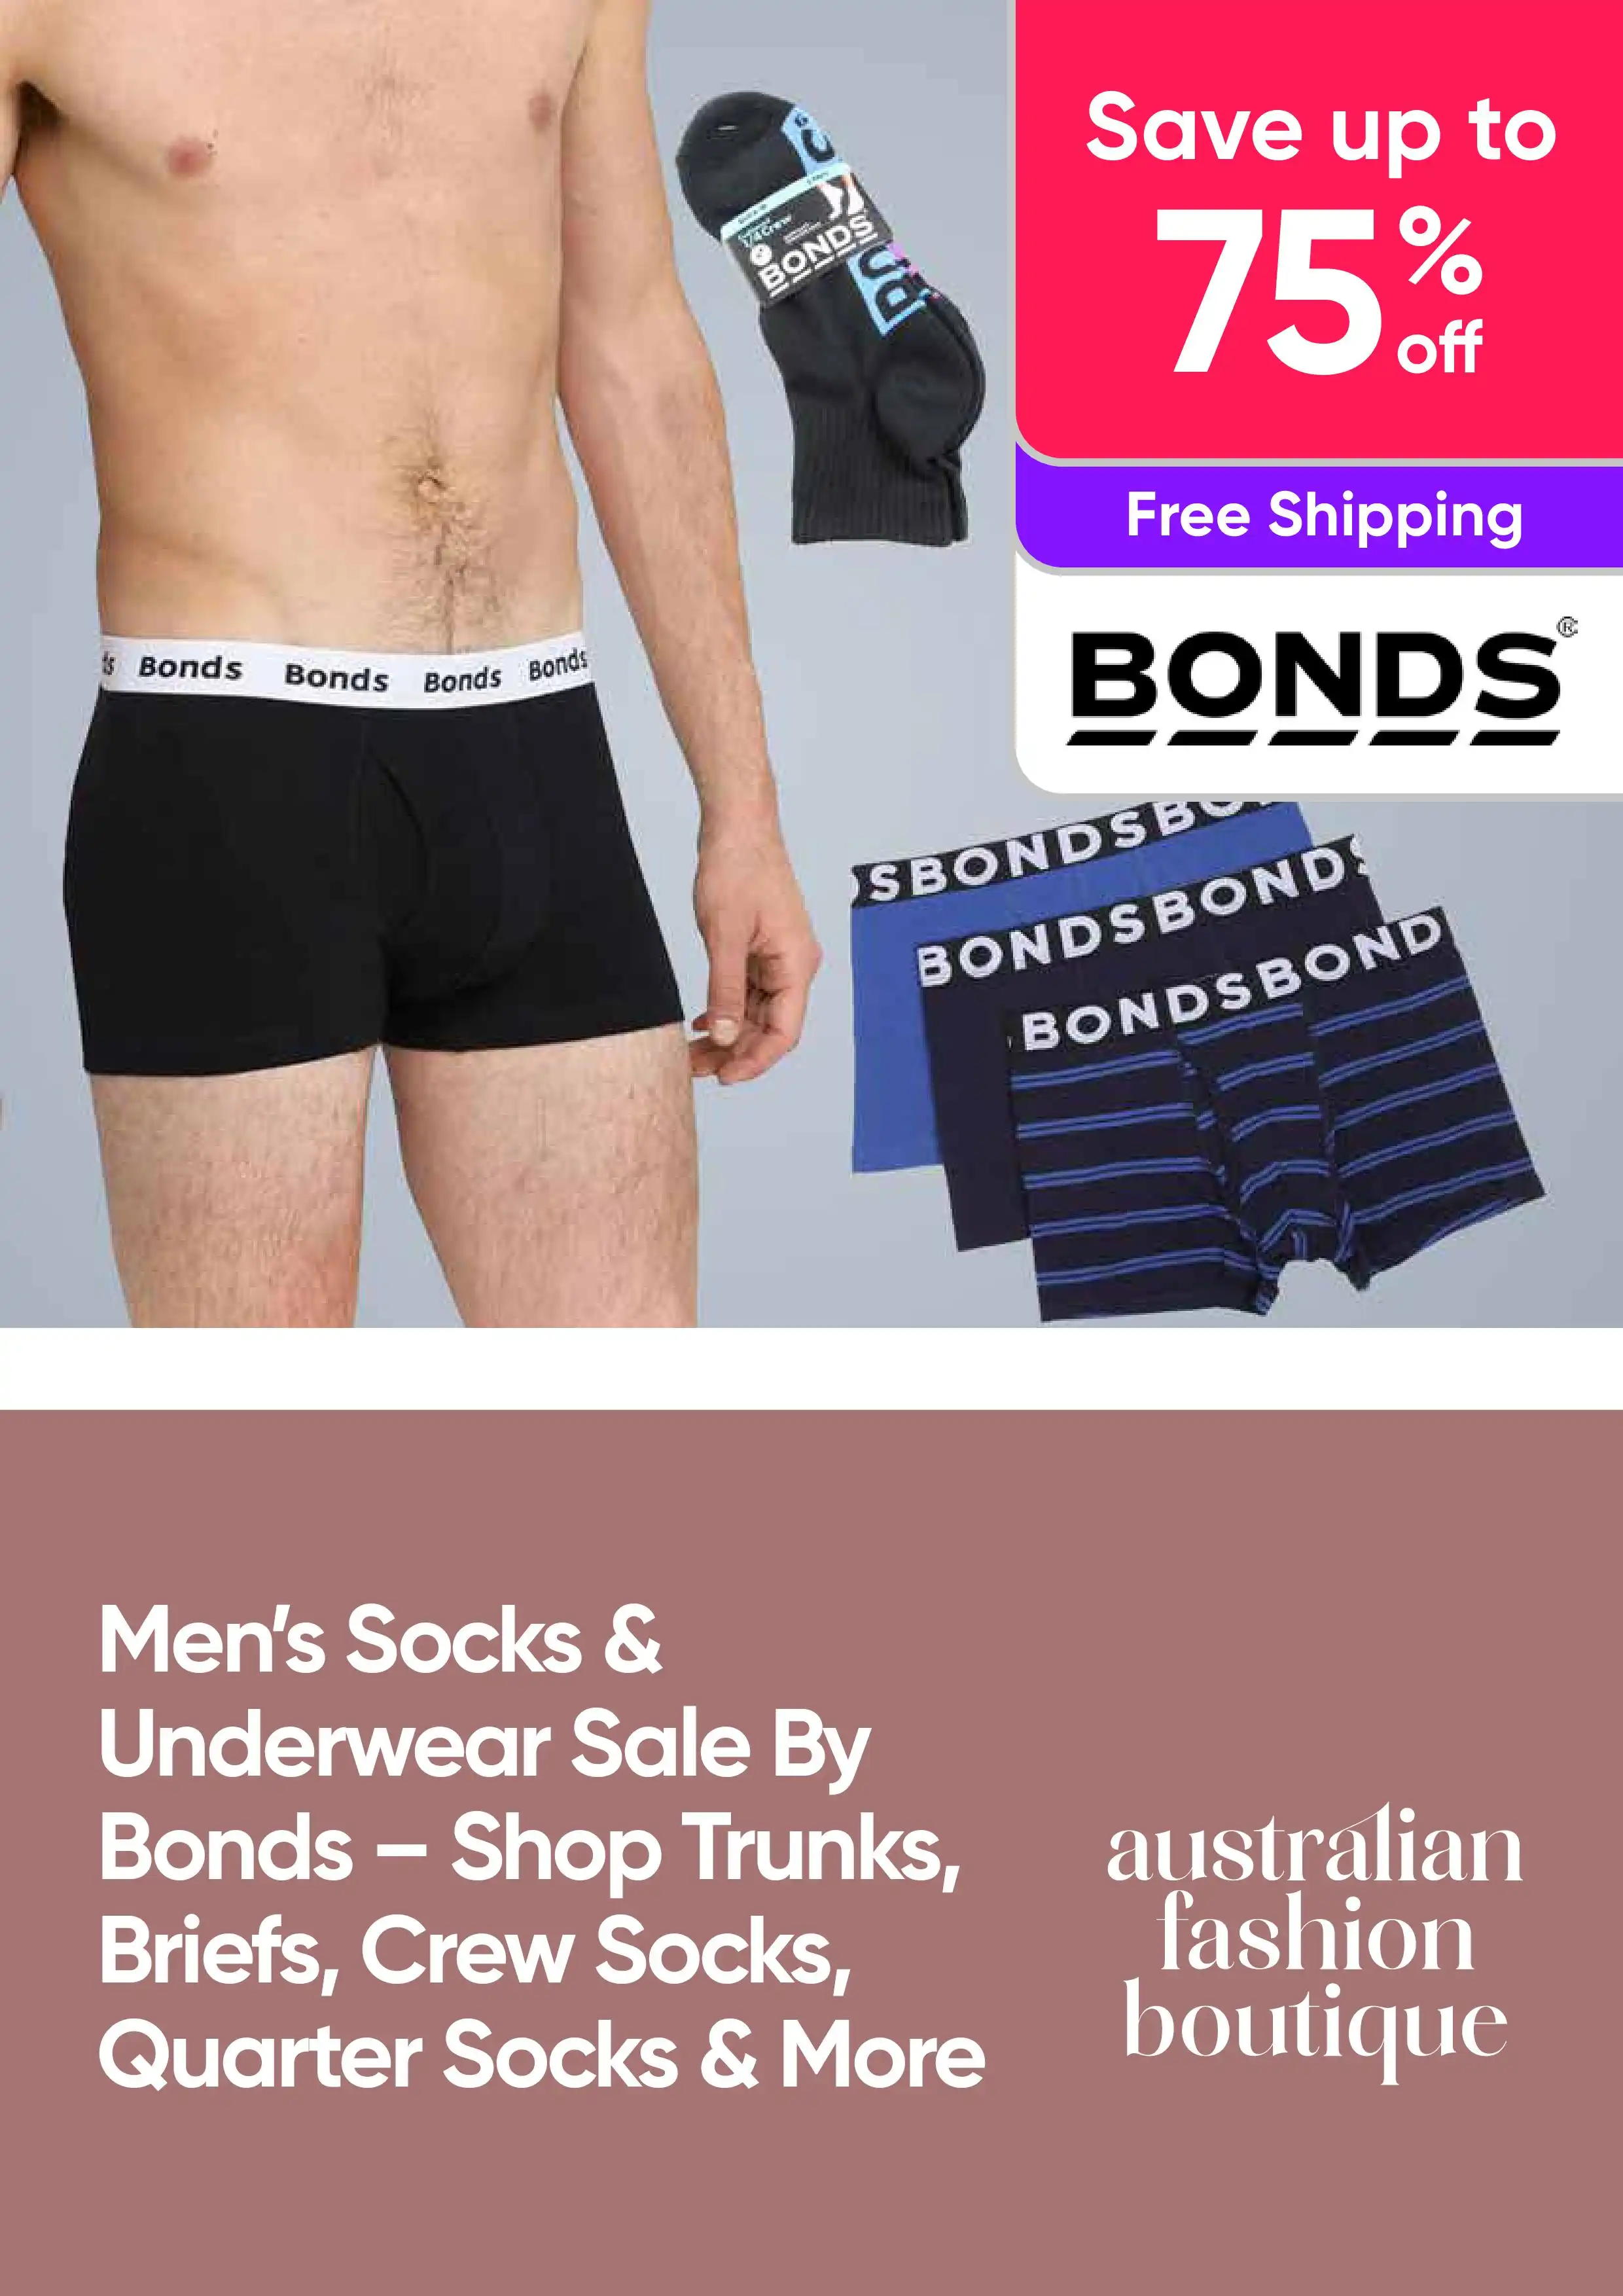 Bonds, Underwear & Socks, Bonds Guyfront Trunks